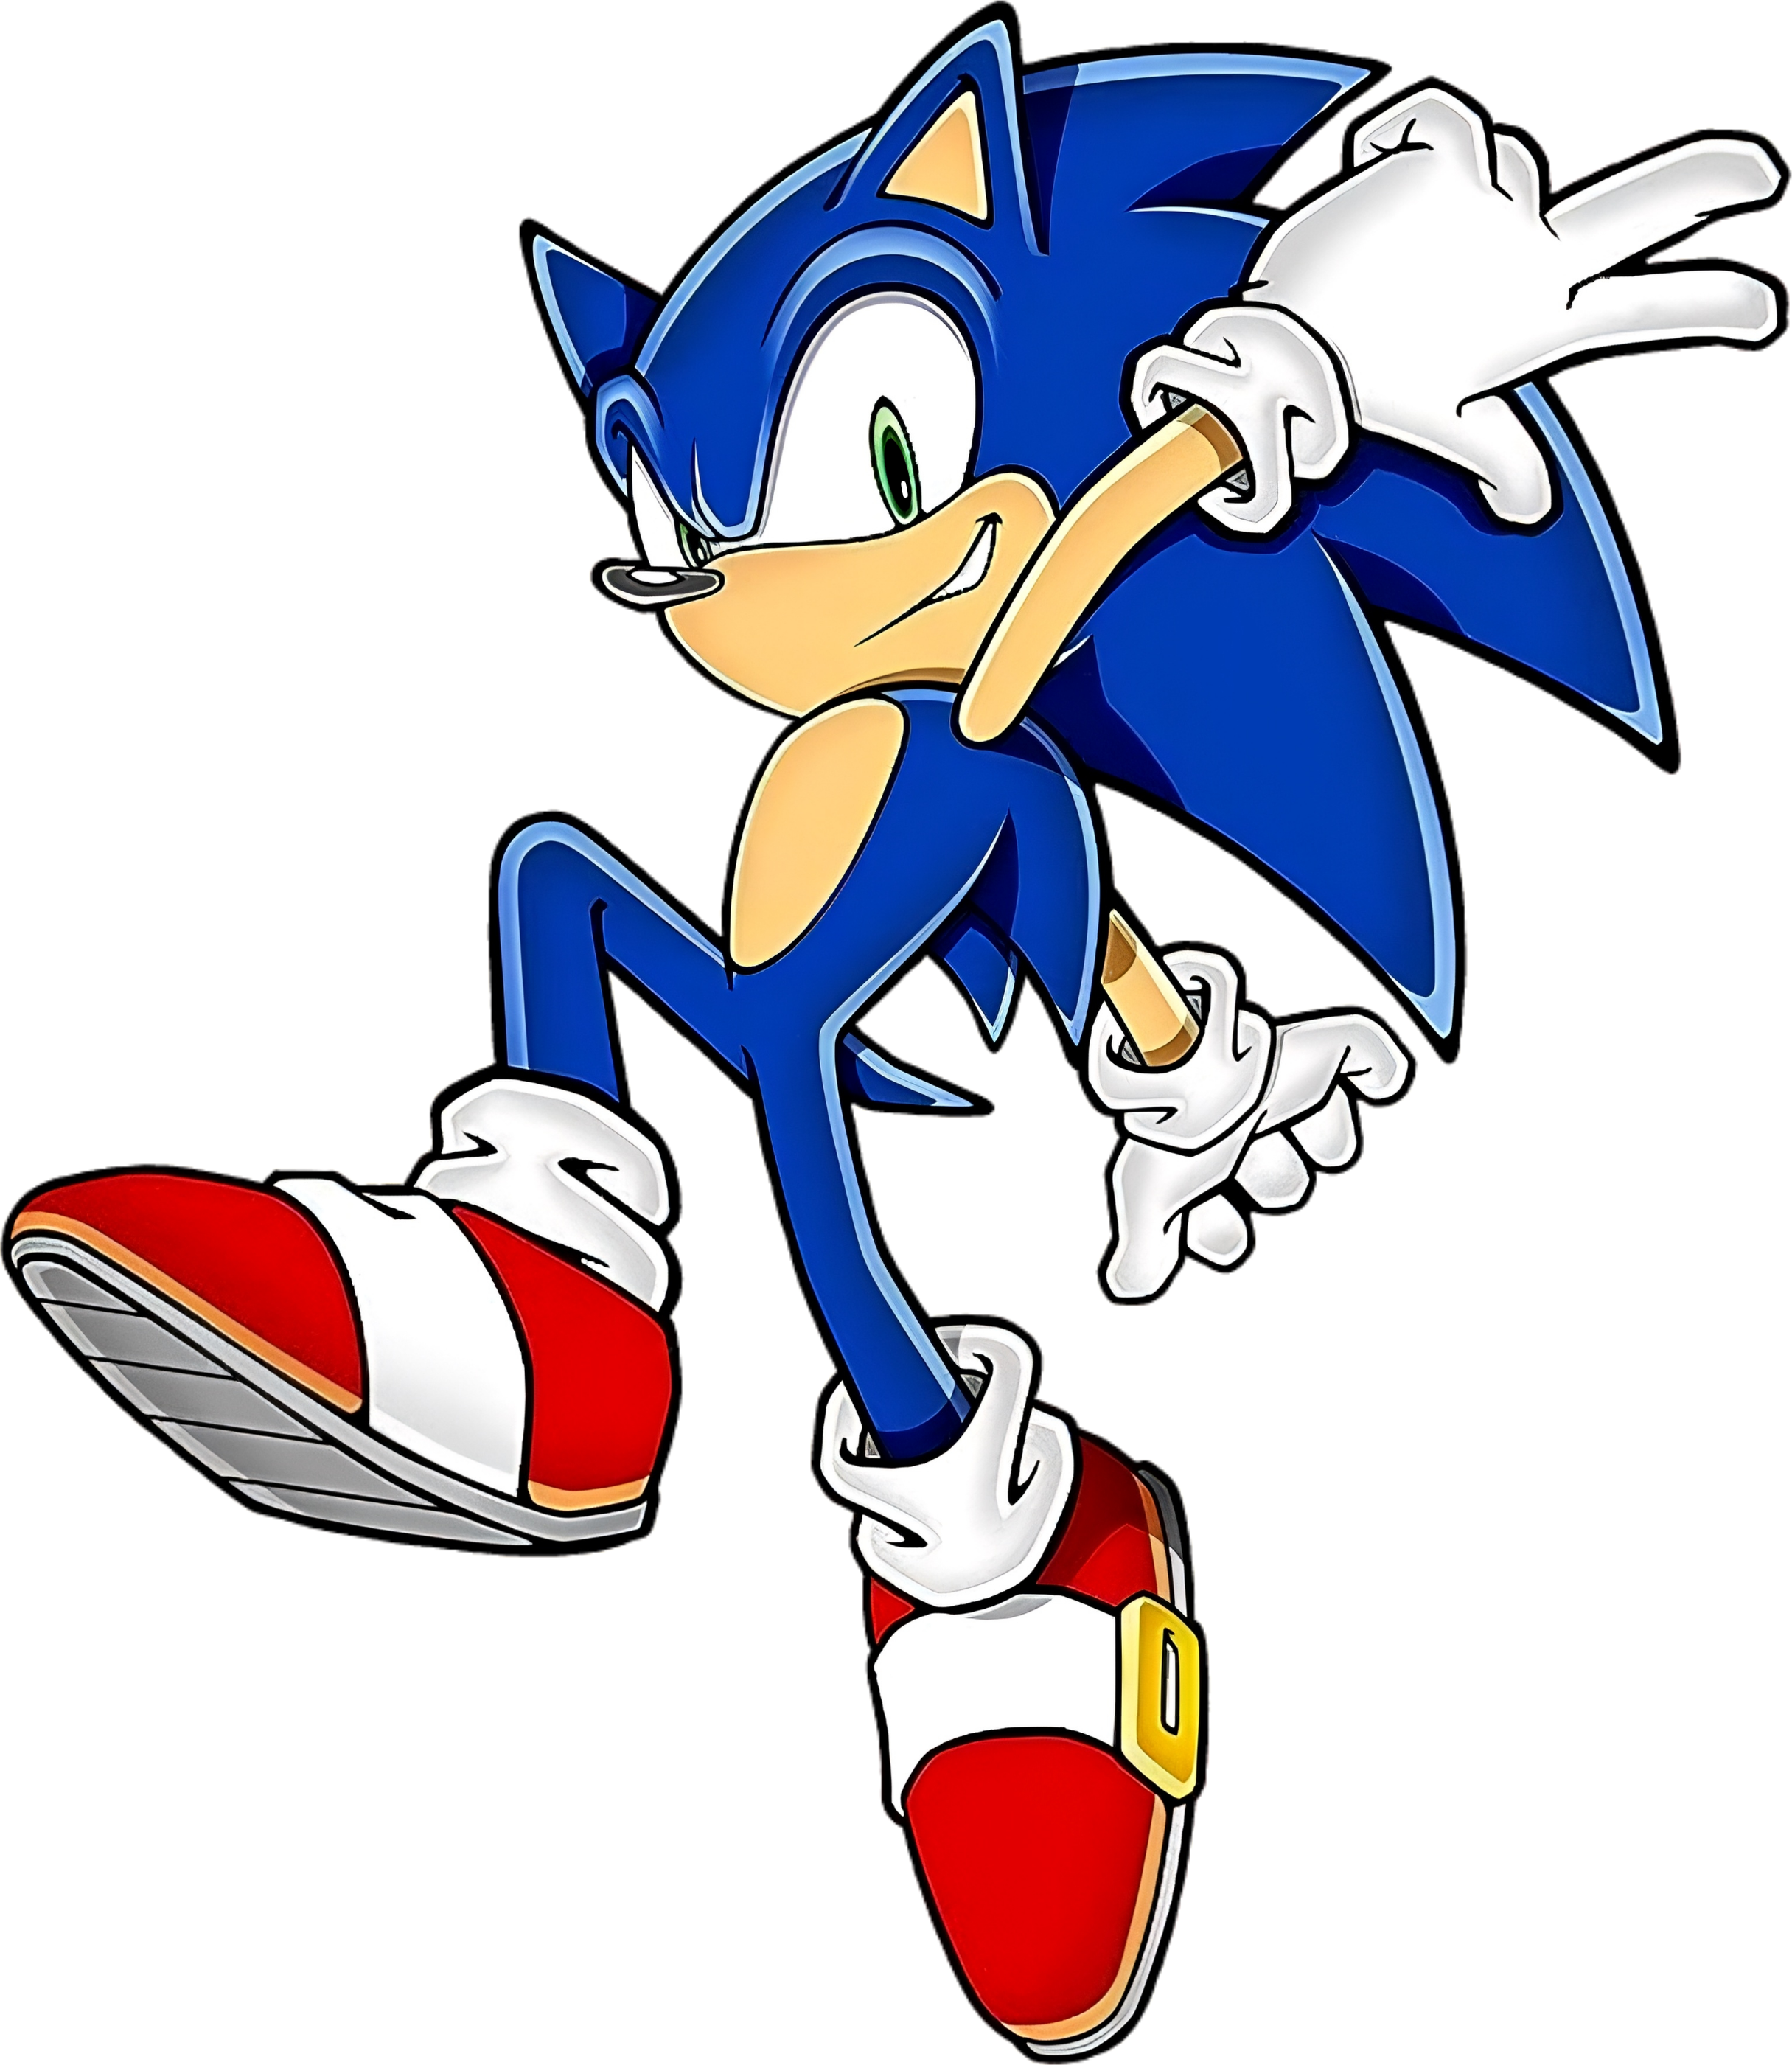 Sonic the Hedgehog (2006) by itsHelias94 on DeviantArt